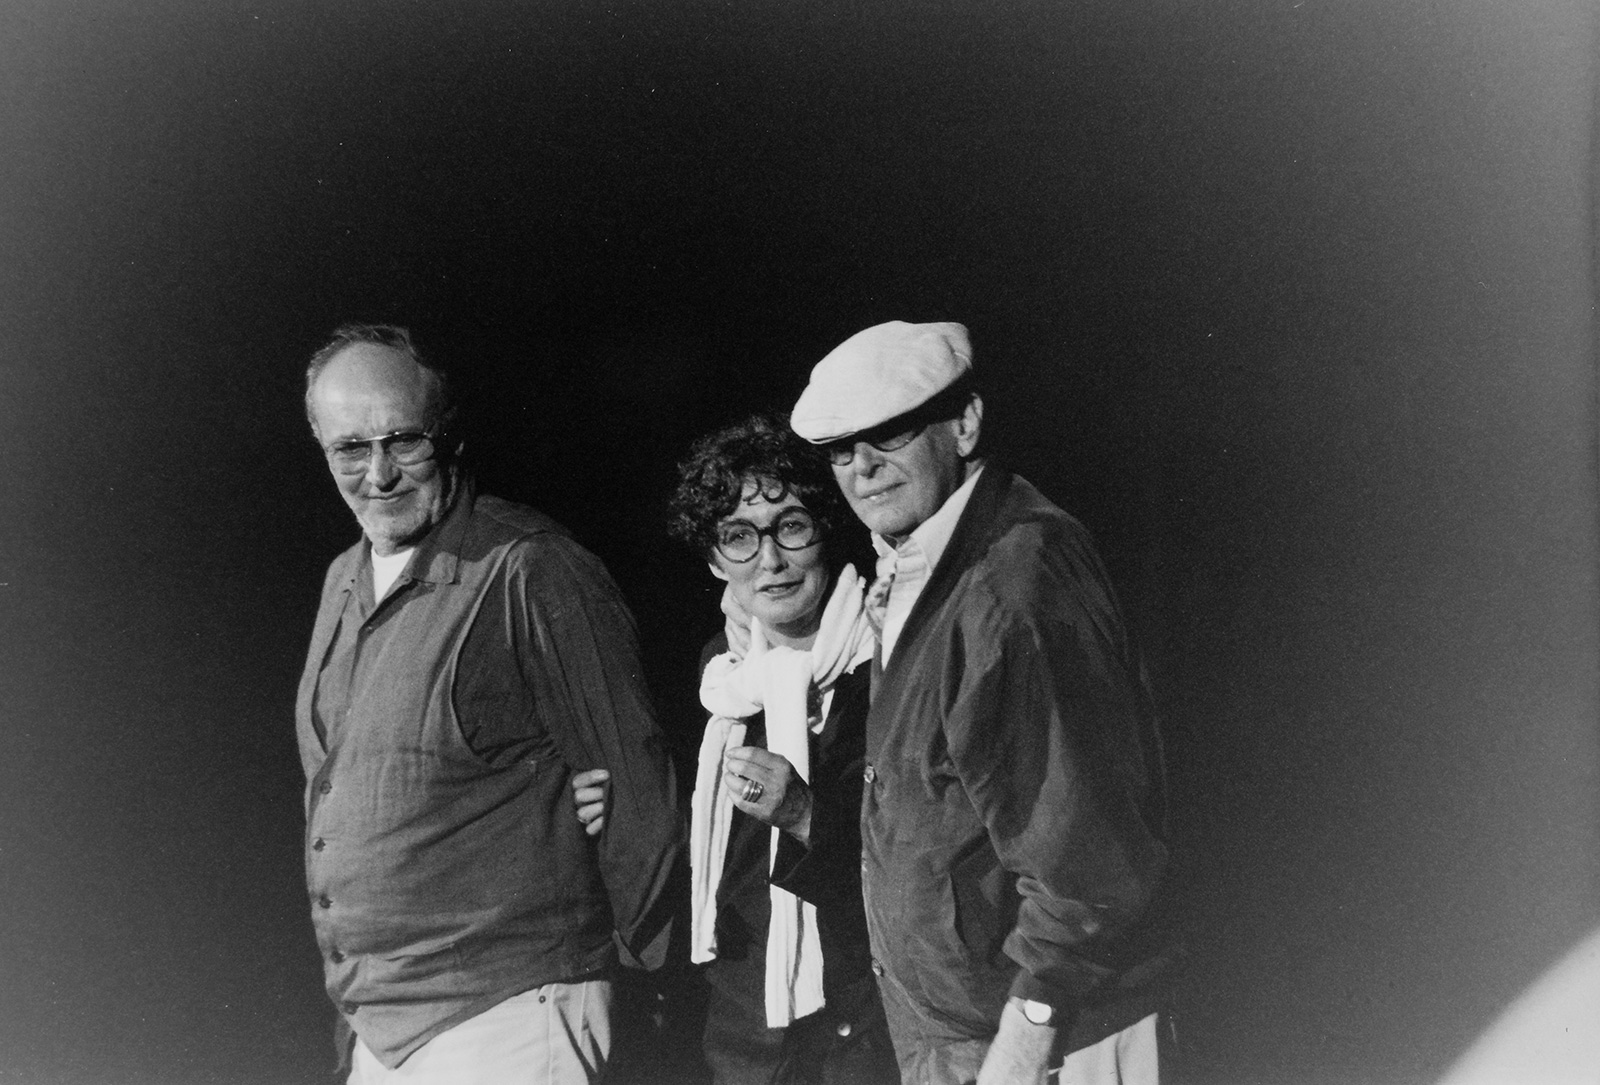 Robert Delpire, Sarah Moon and Henri Cartier-Bresson on the Théâtre Antique stage, Bernard Batais, 1994.